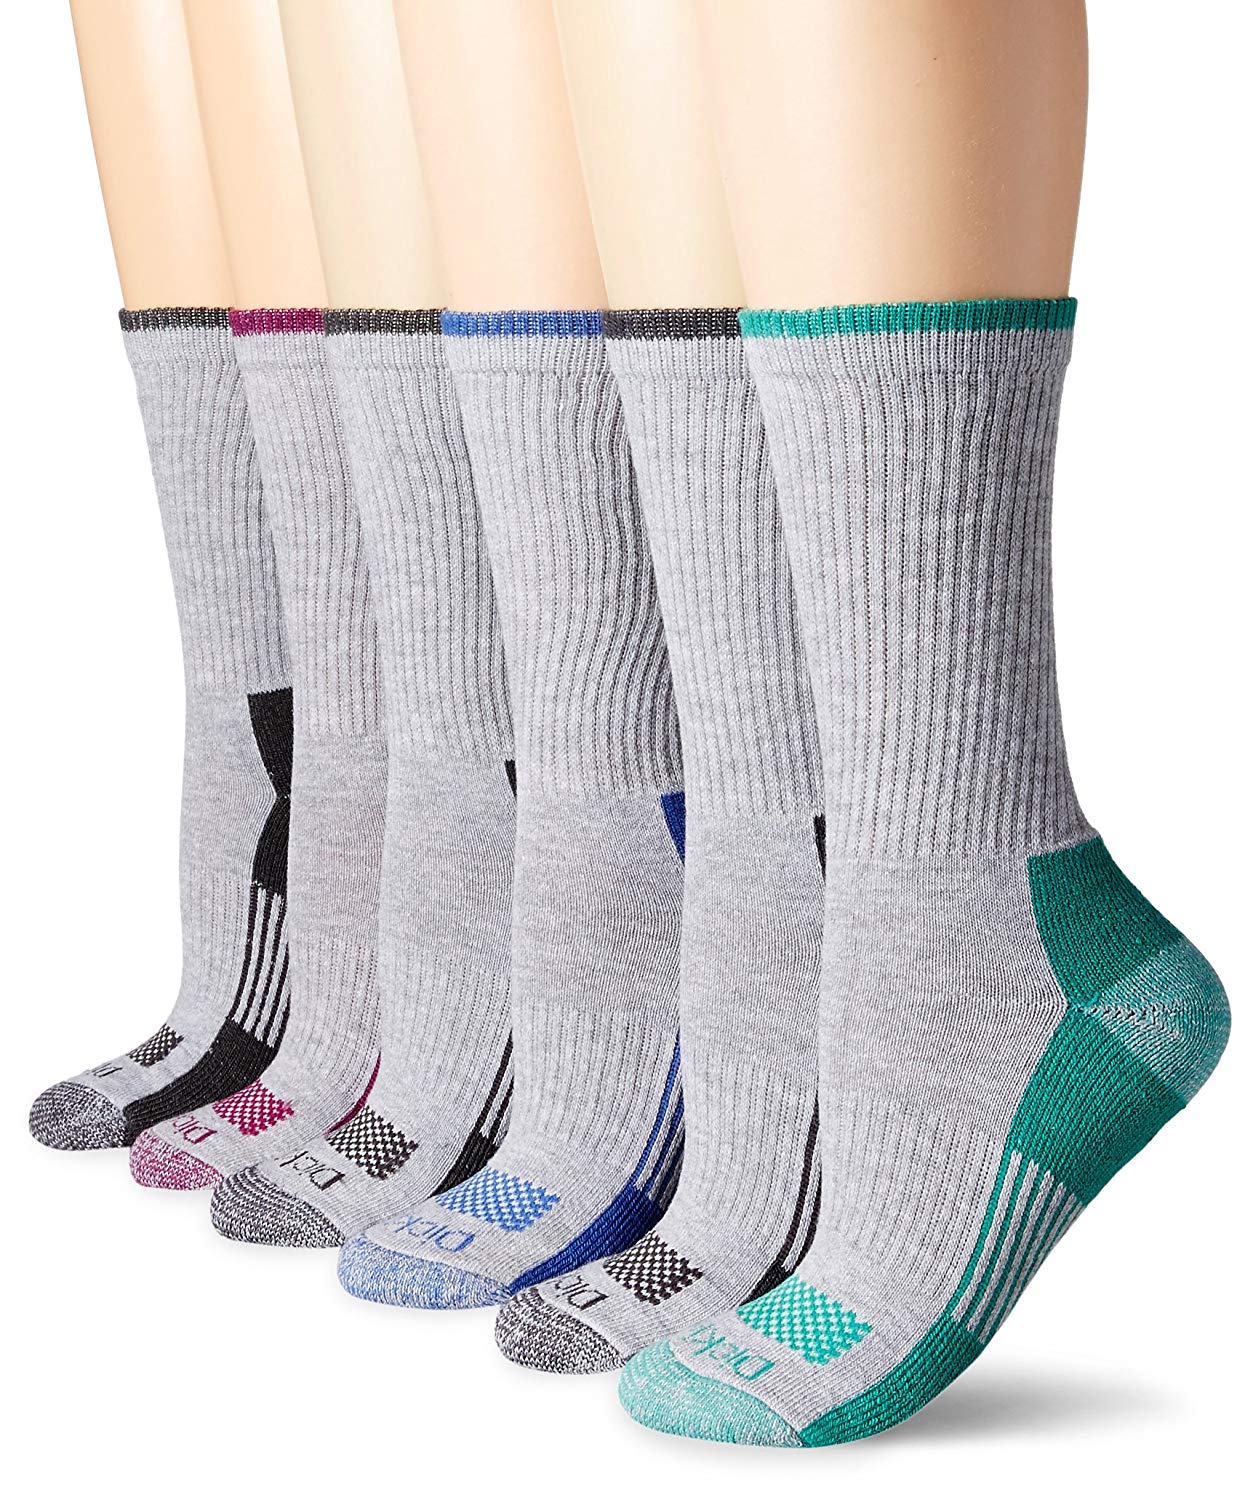 Dickies Women's Dritech Advanced Moisture Wicking Crew Sock, Grey, Size 6.0 NLhA eBay